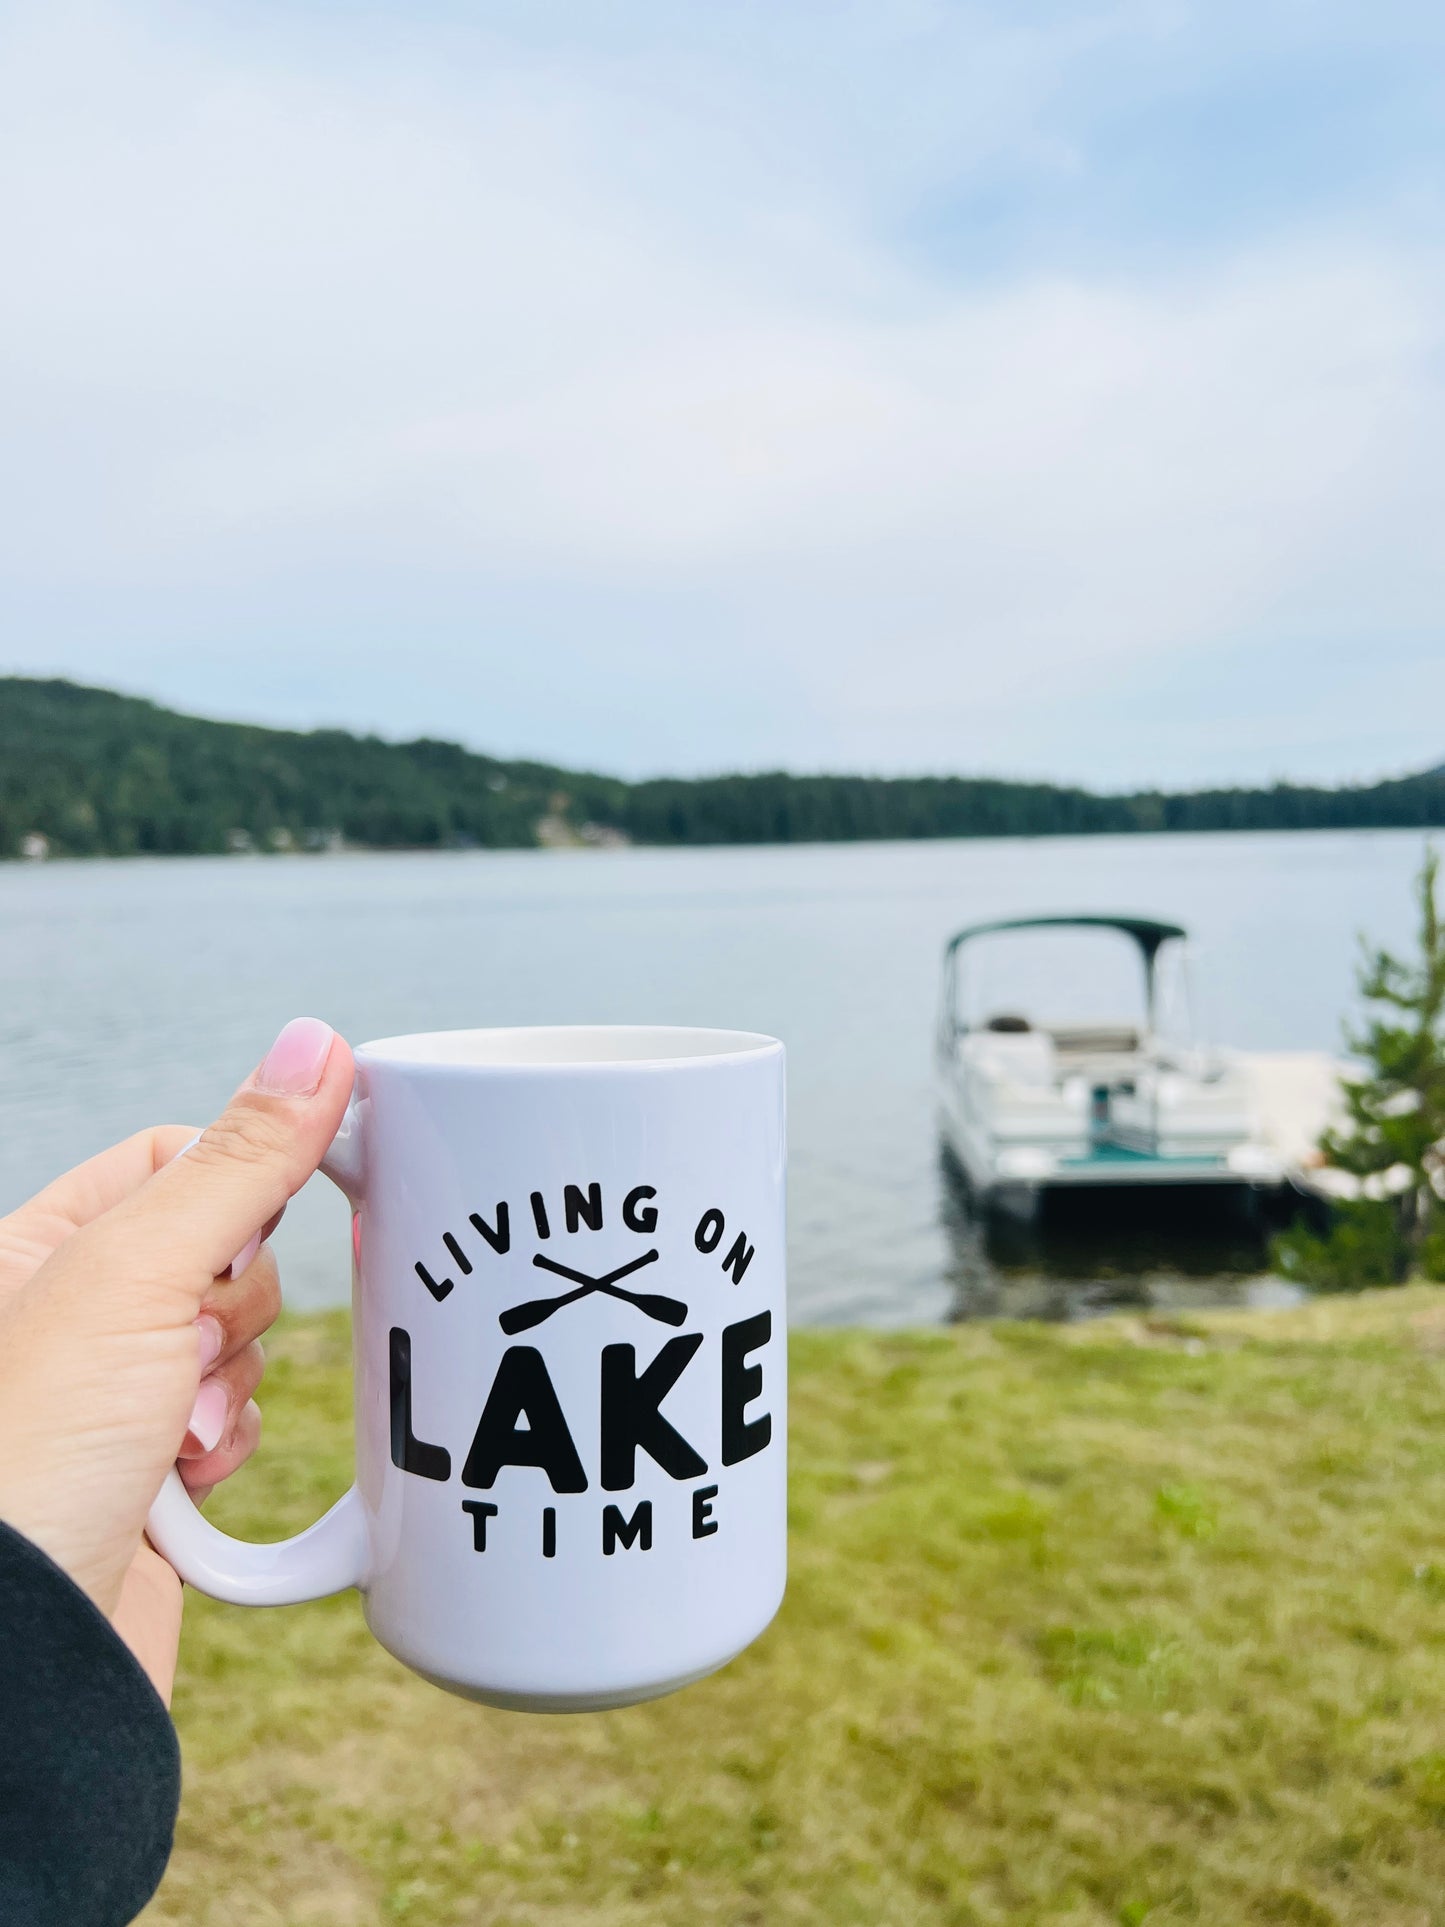 Living on lake time